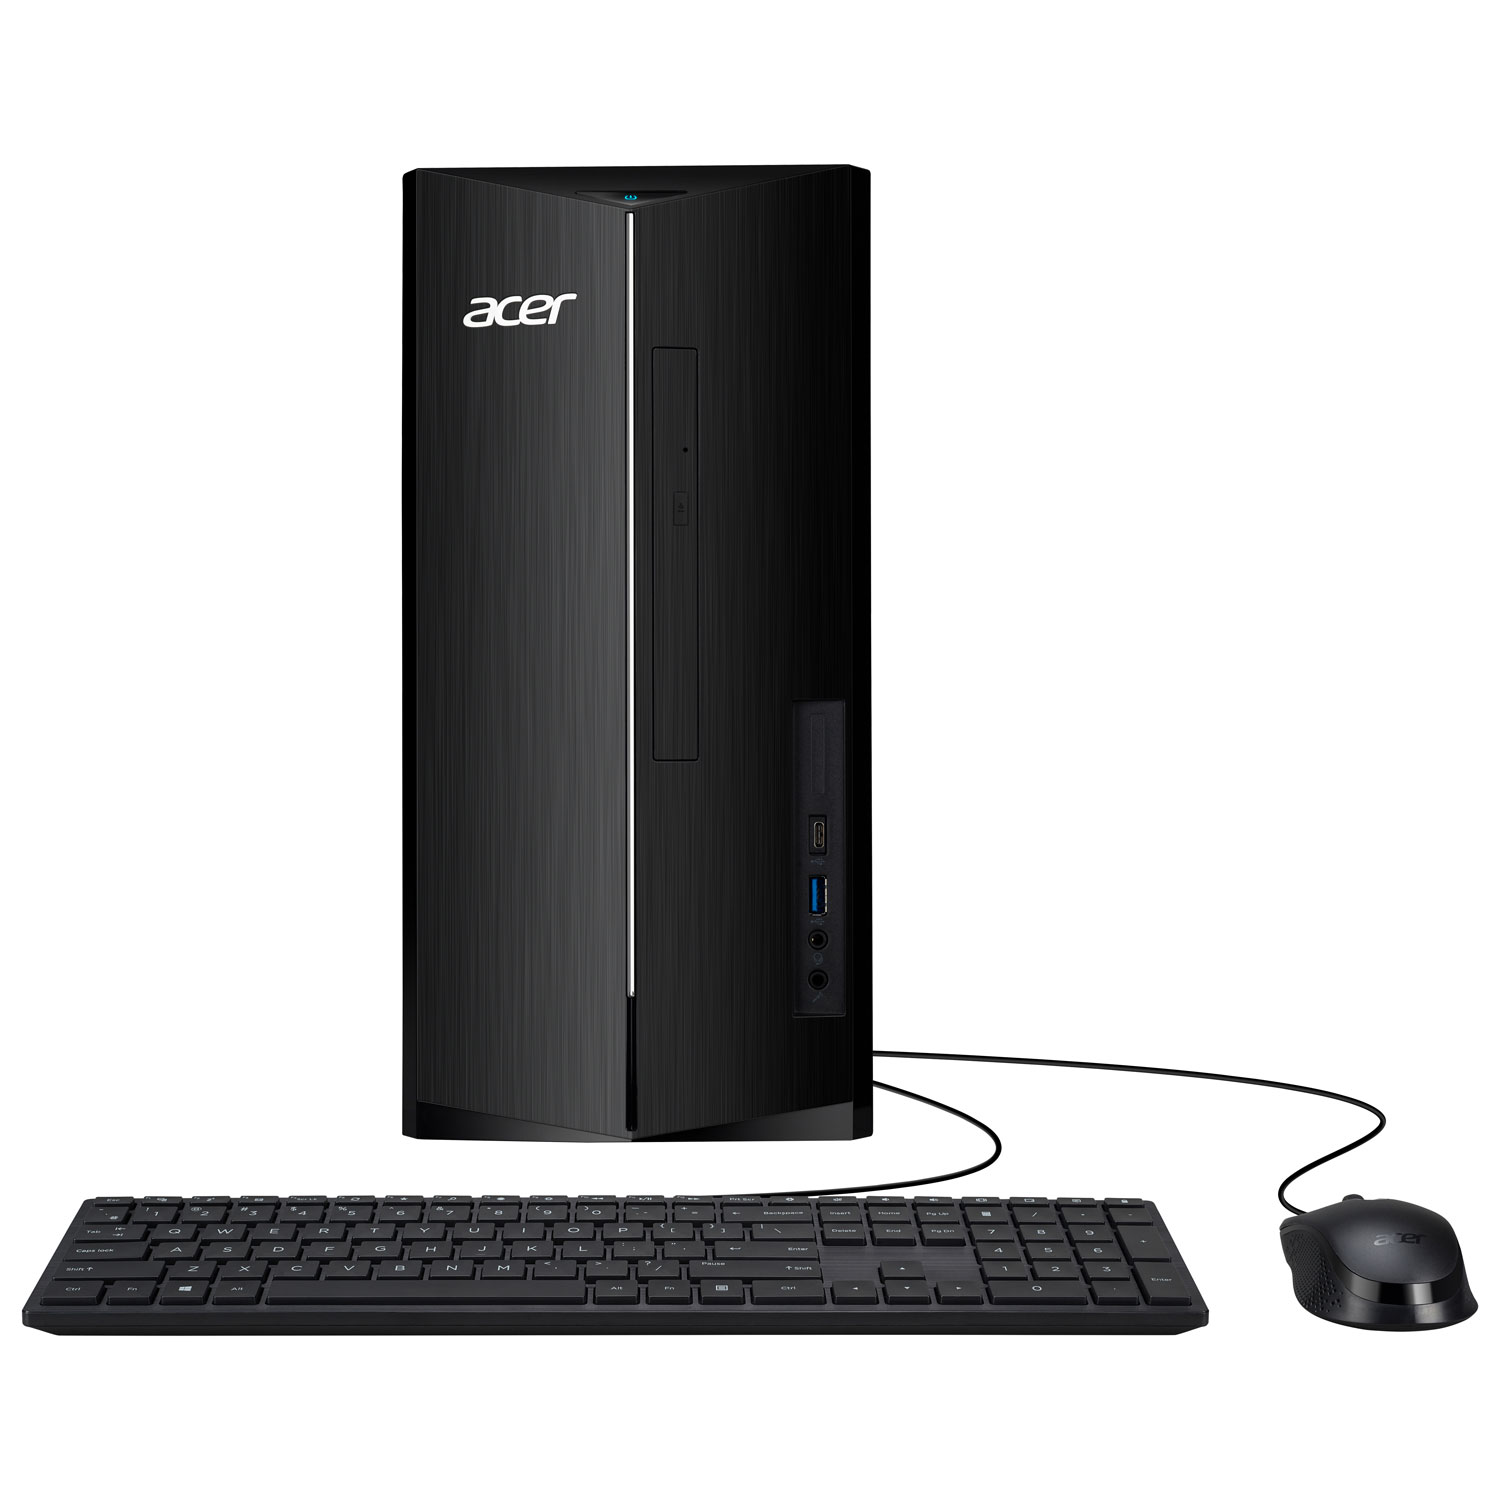 Acer Aspire TC Desktop PC (Intel Core-i5 12400/256GB SSD/8GB RAM) - Only at Best Buy